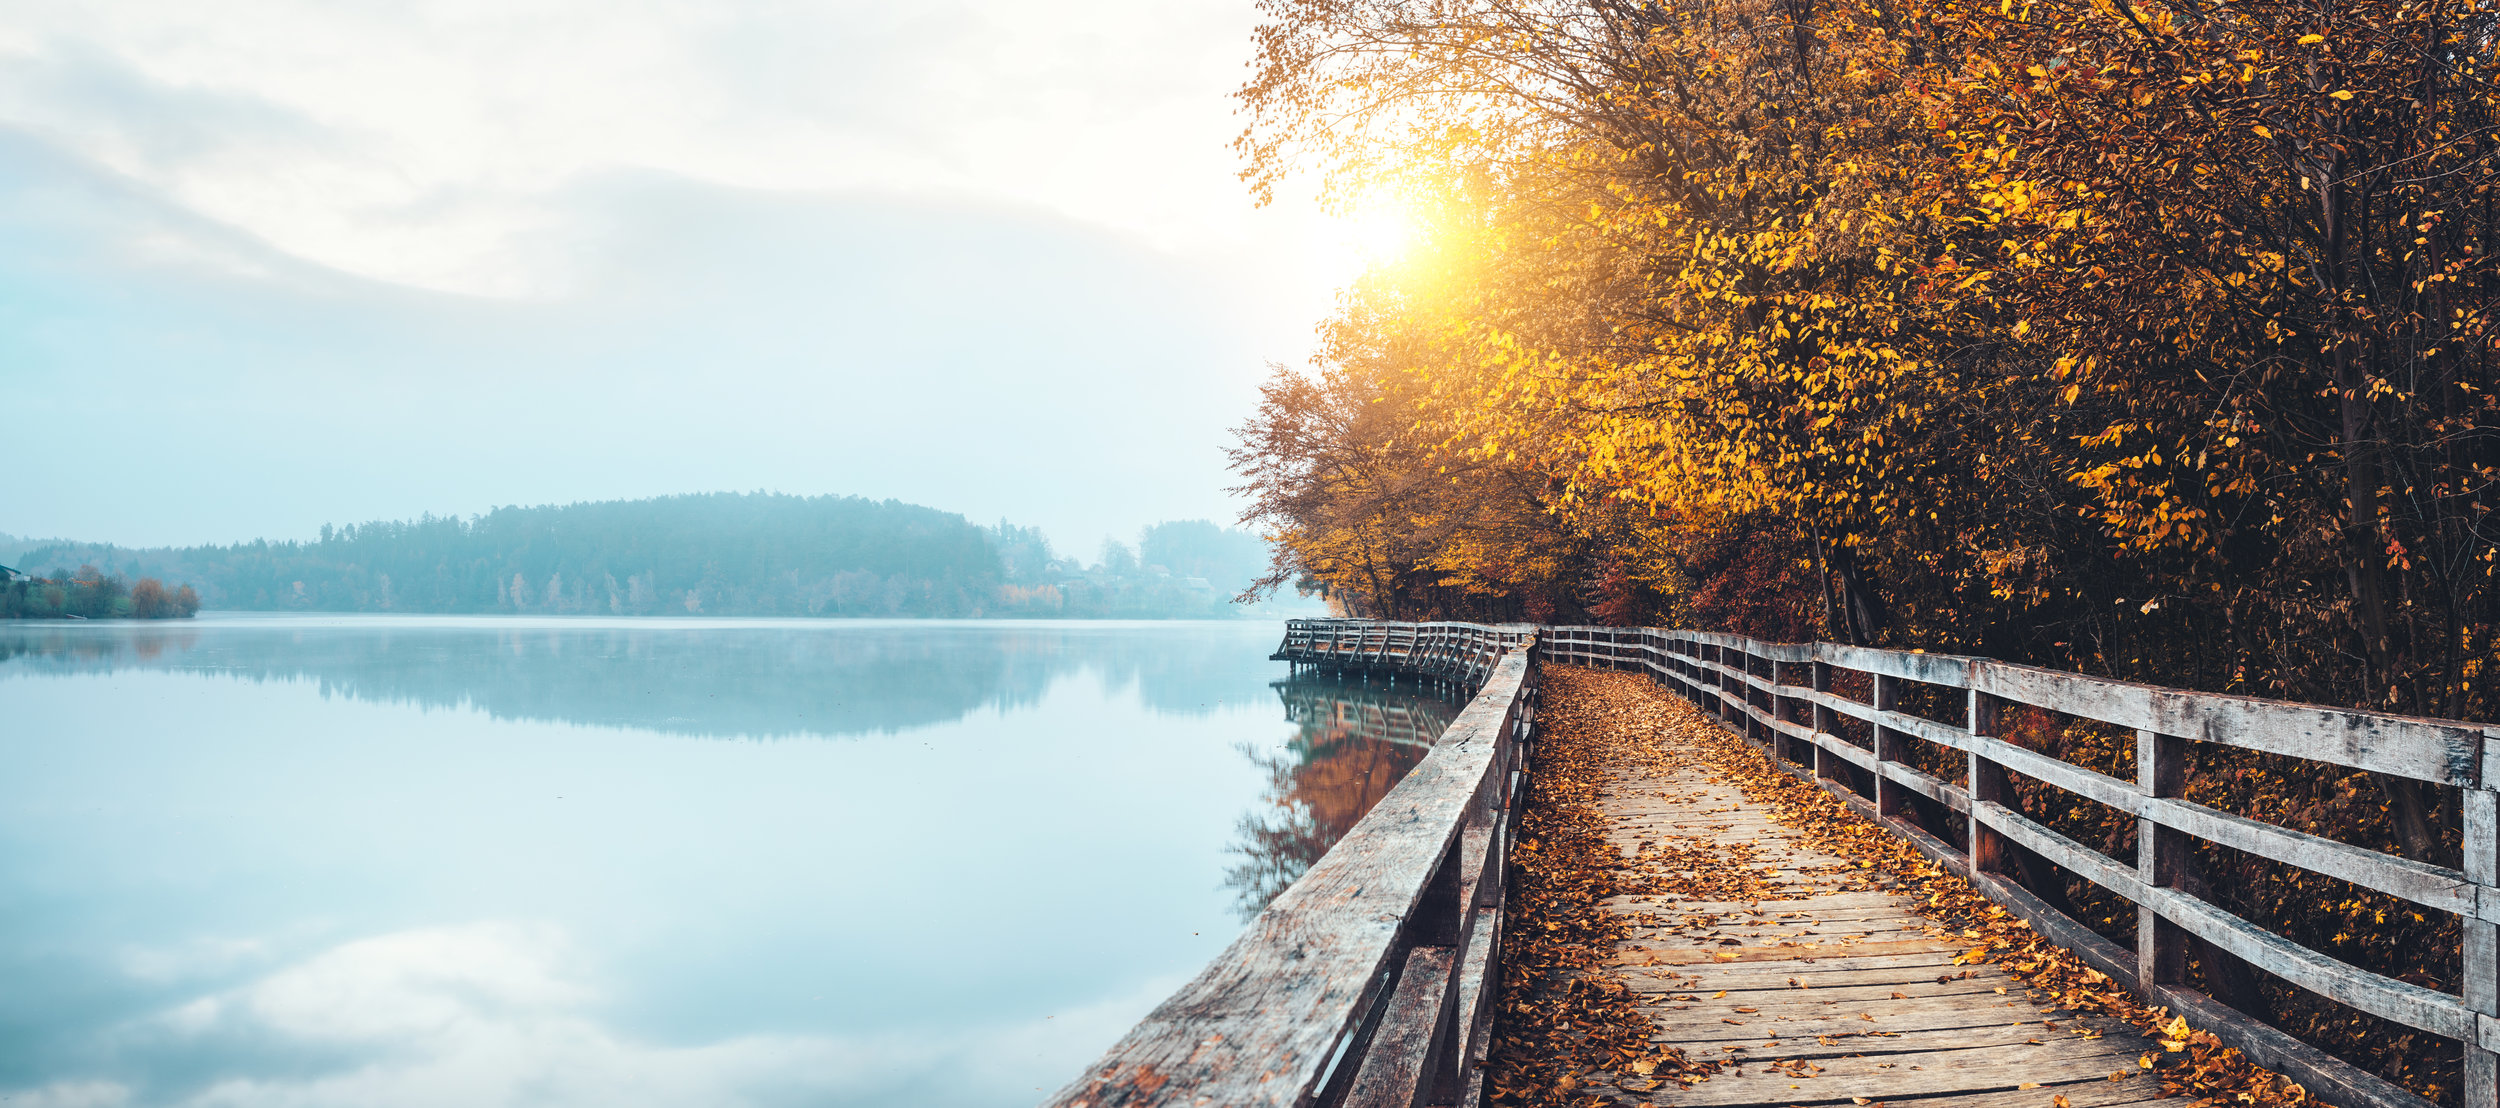 Walkway along serene lake in the autumn